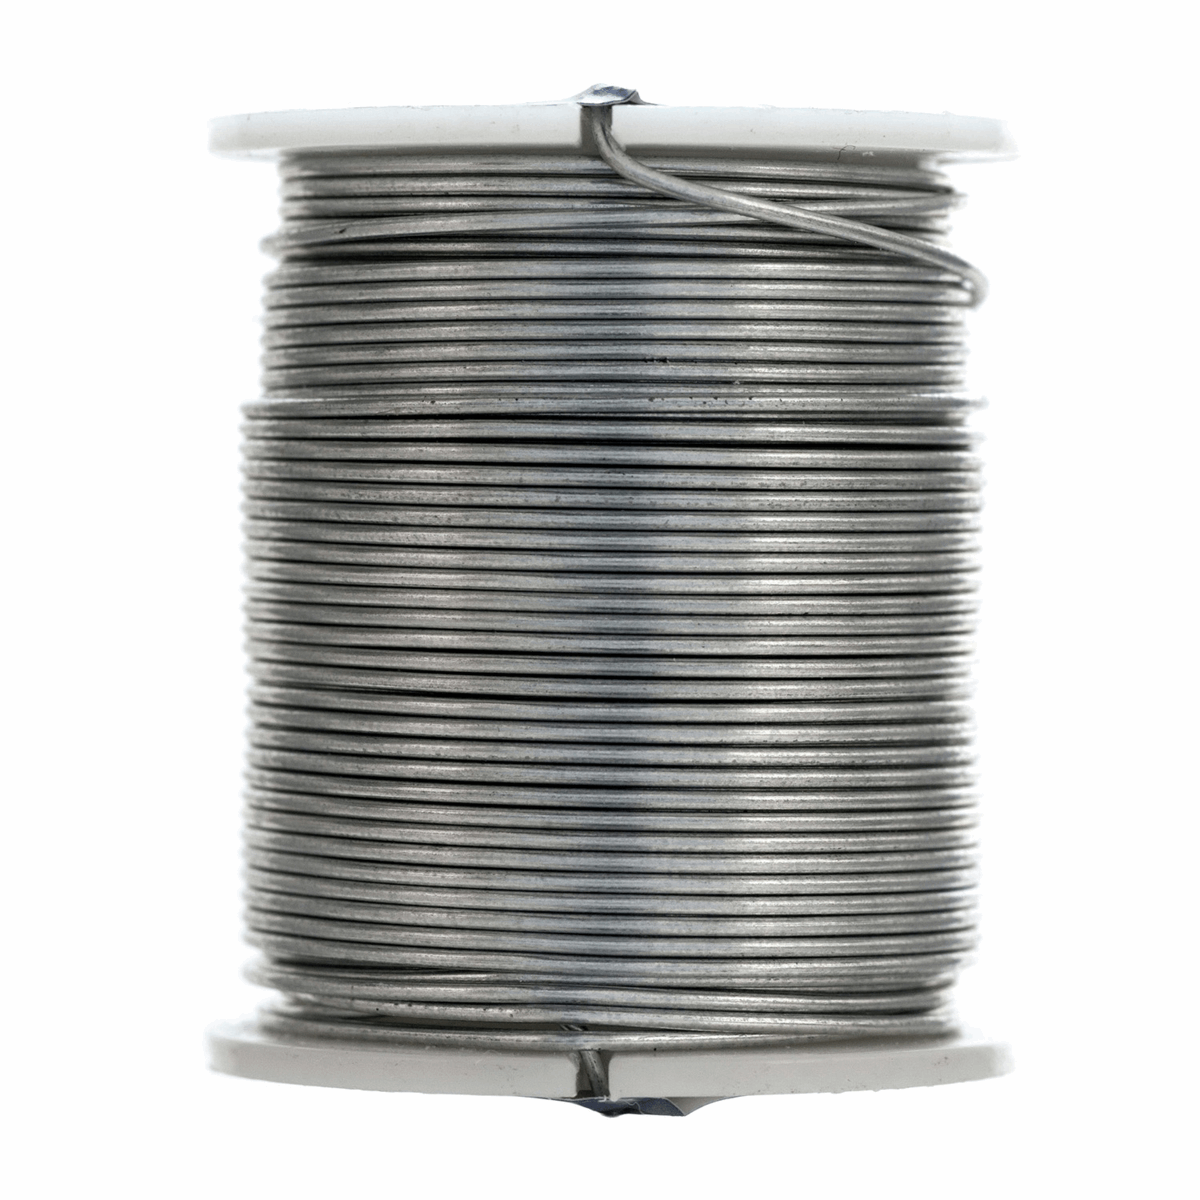 Trimits 20 Gauge Beading Wire - 9m